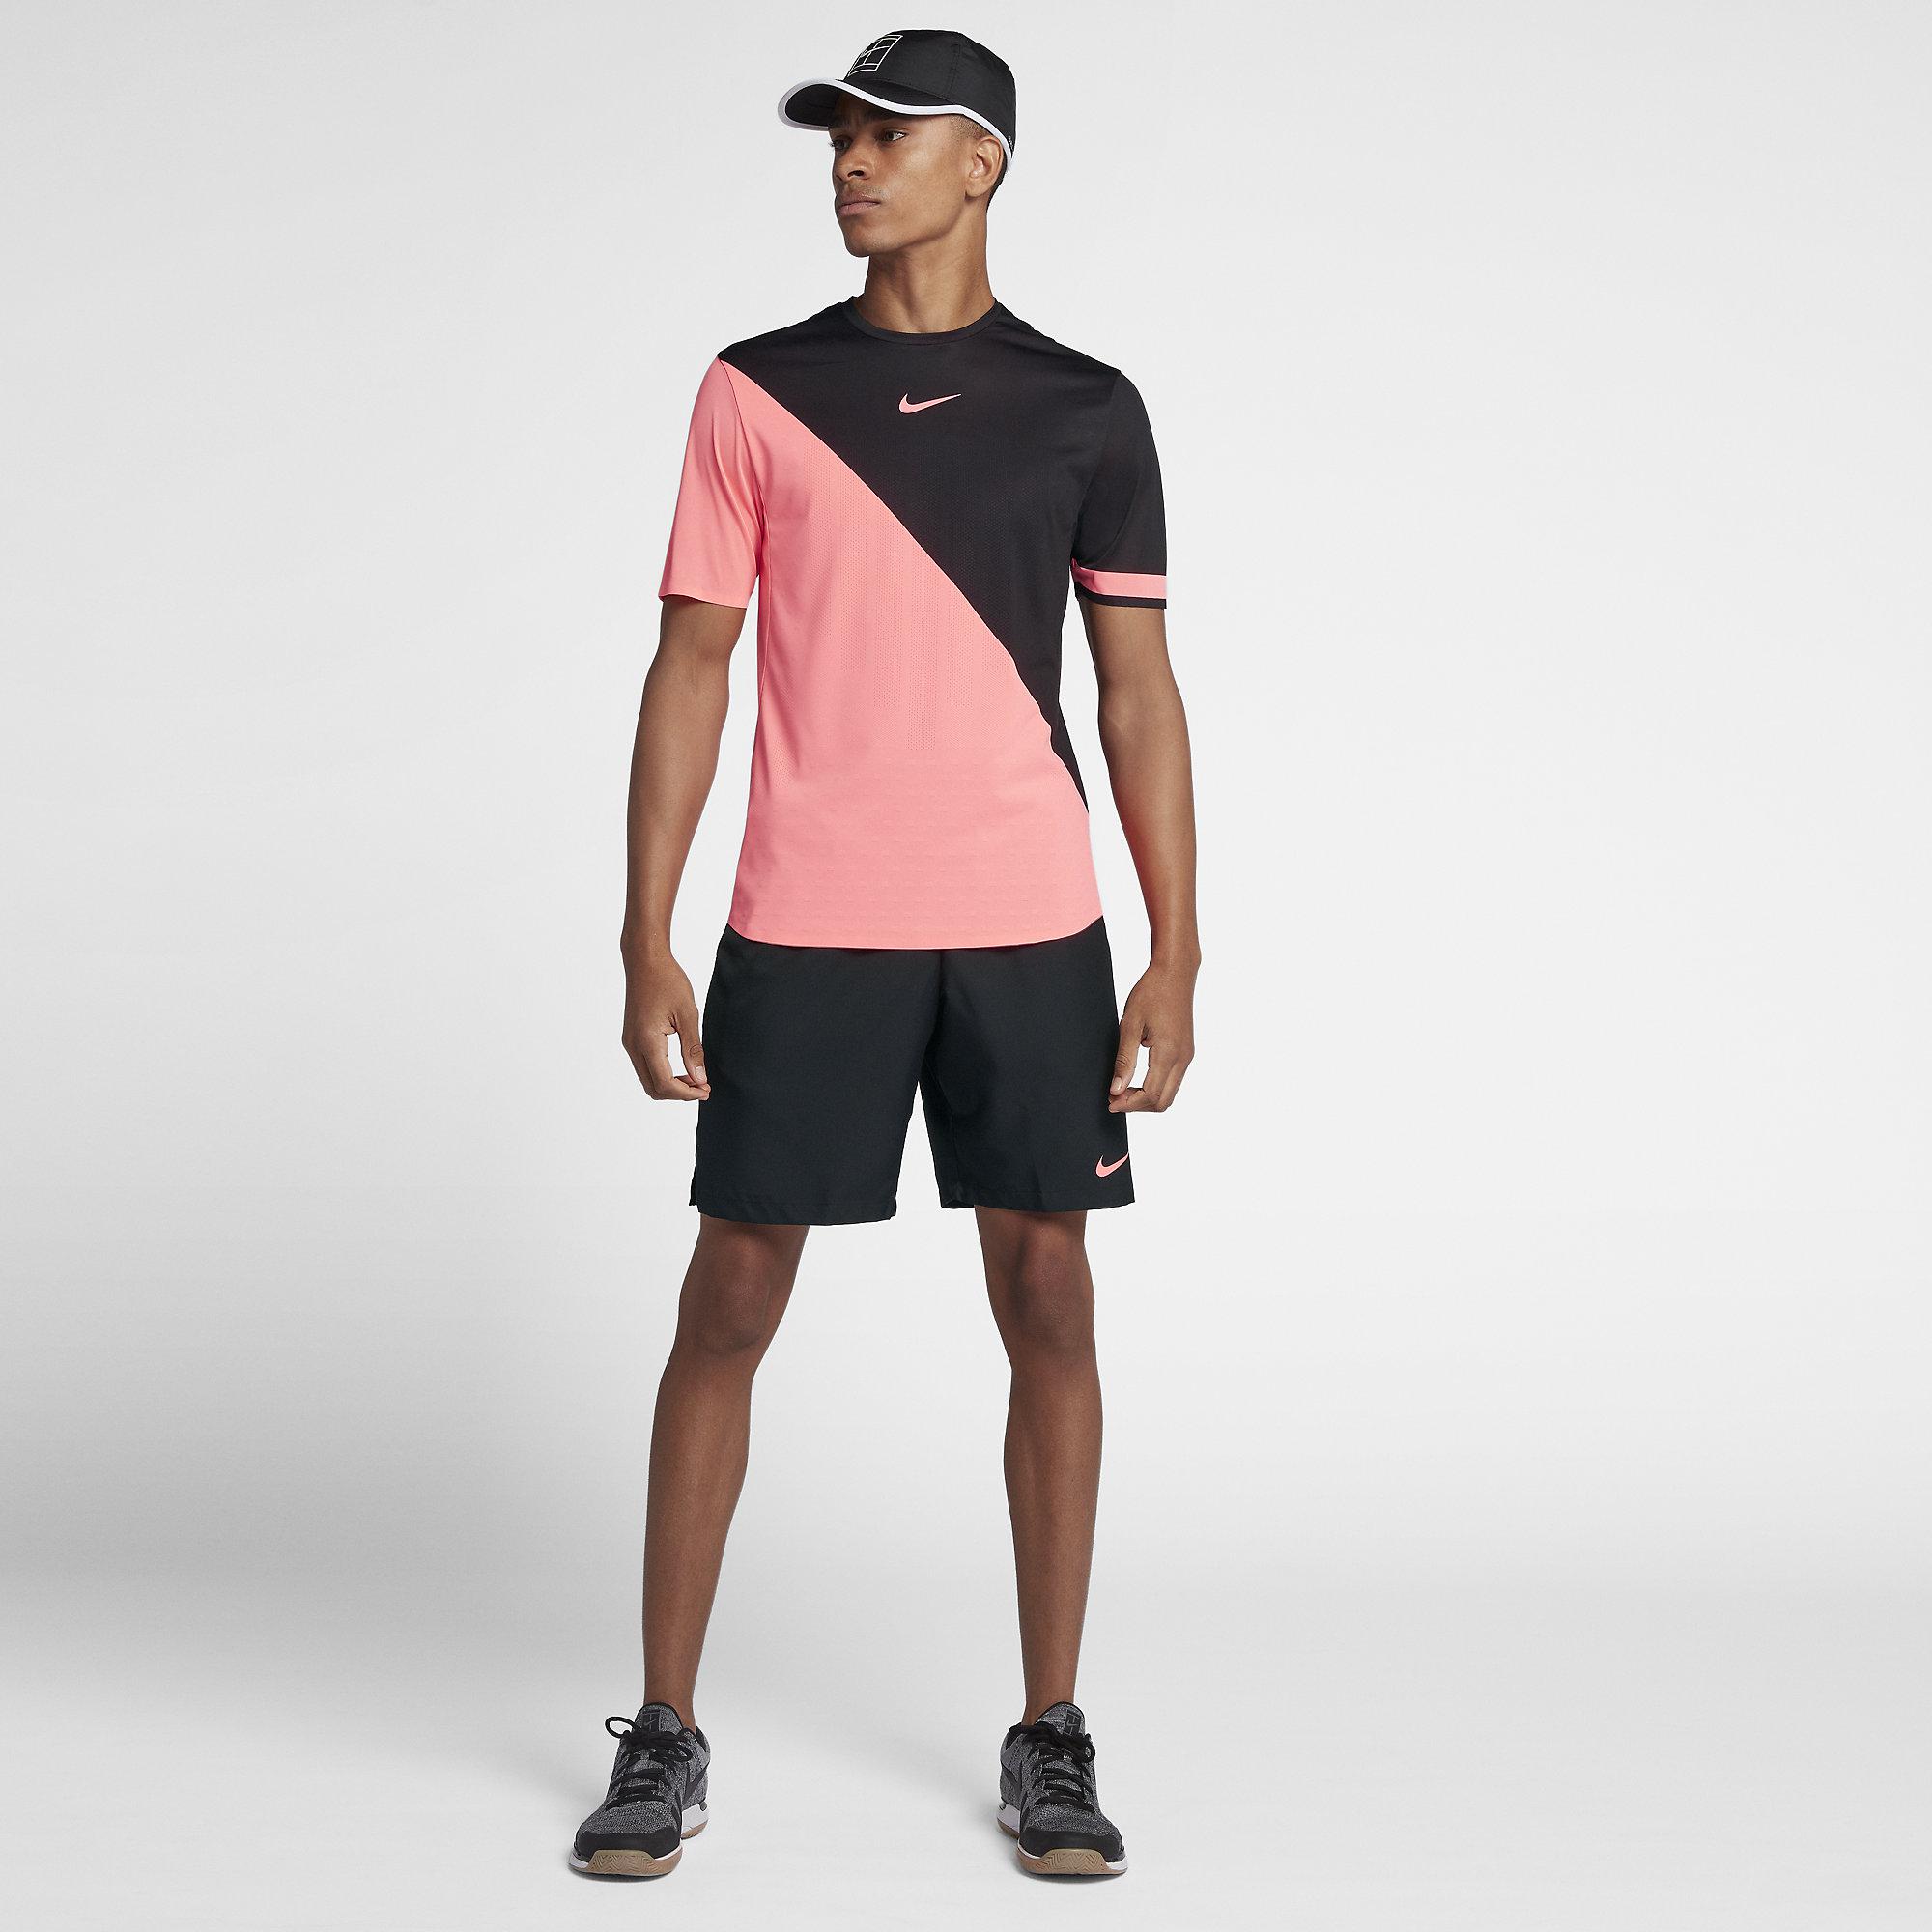 Nike Zonal Cooling Top - Lava Glow/Black Tennisnuts.com